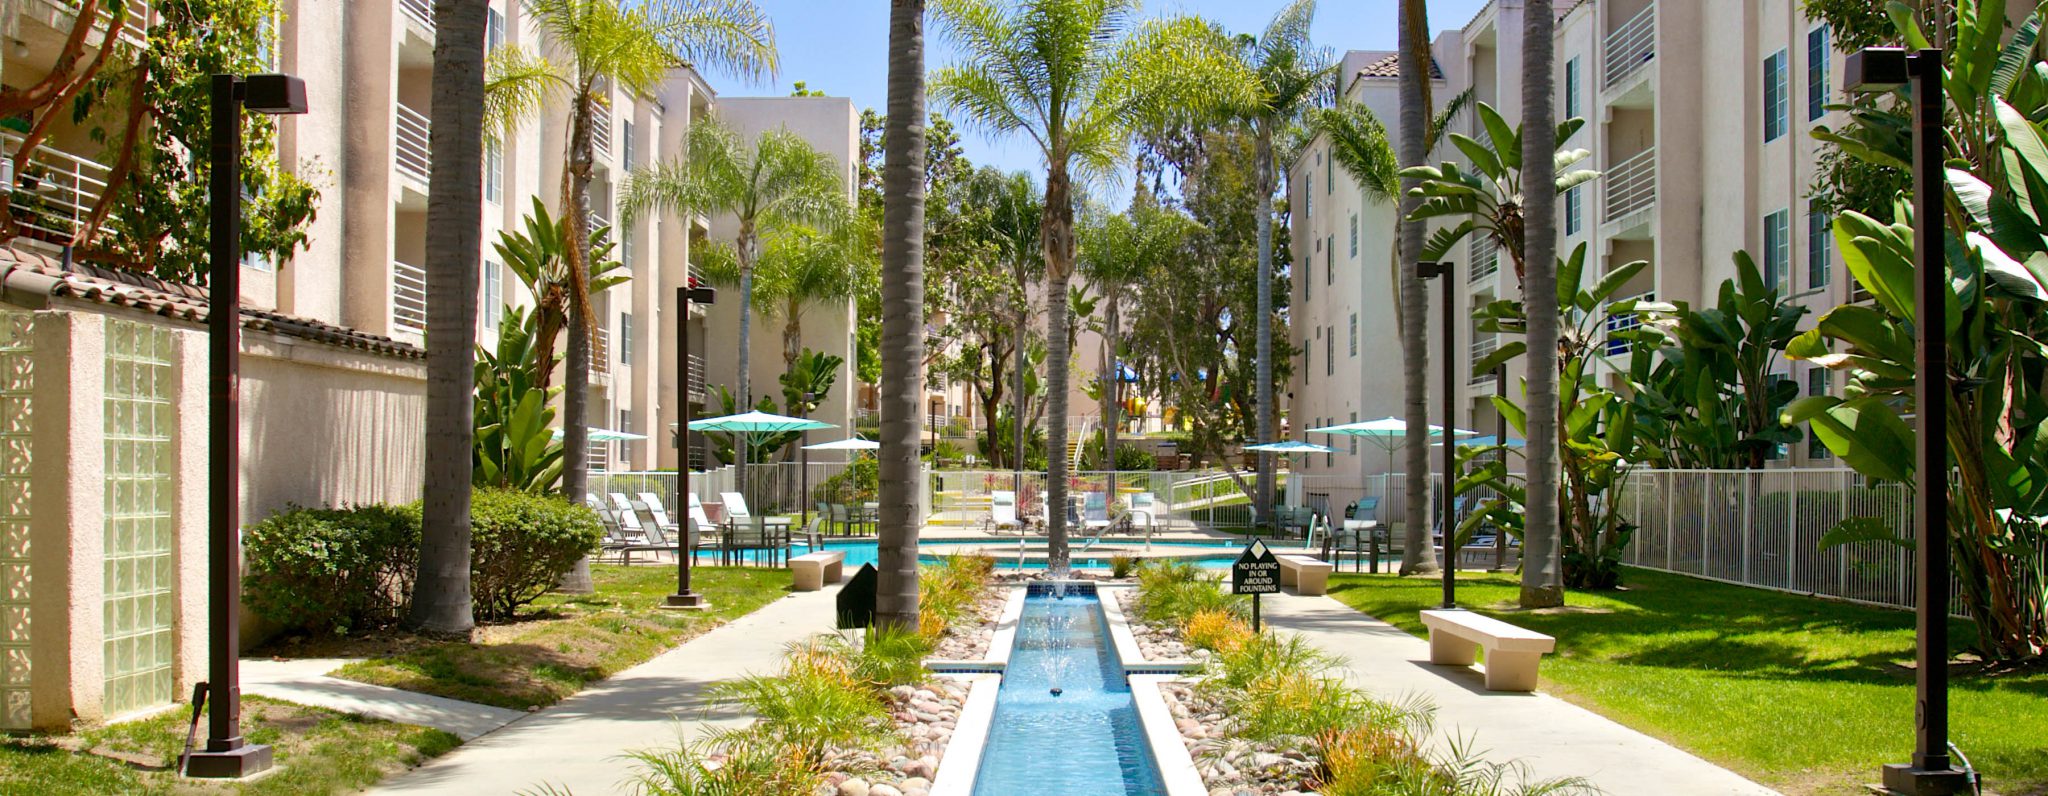 La Regencia: 1, 2 & 3 BR Apartment Rentals in University City, CA